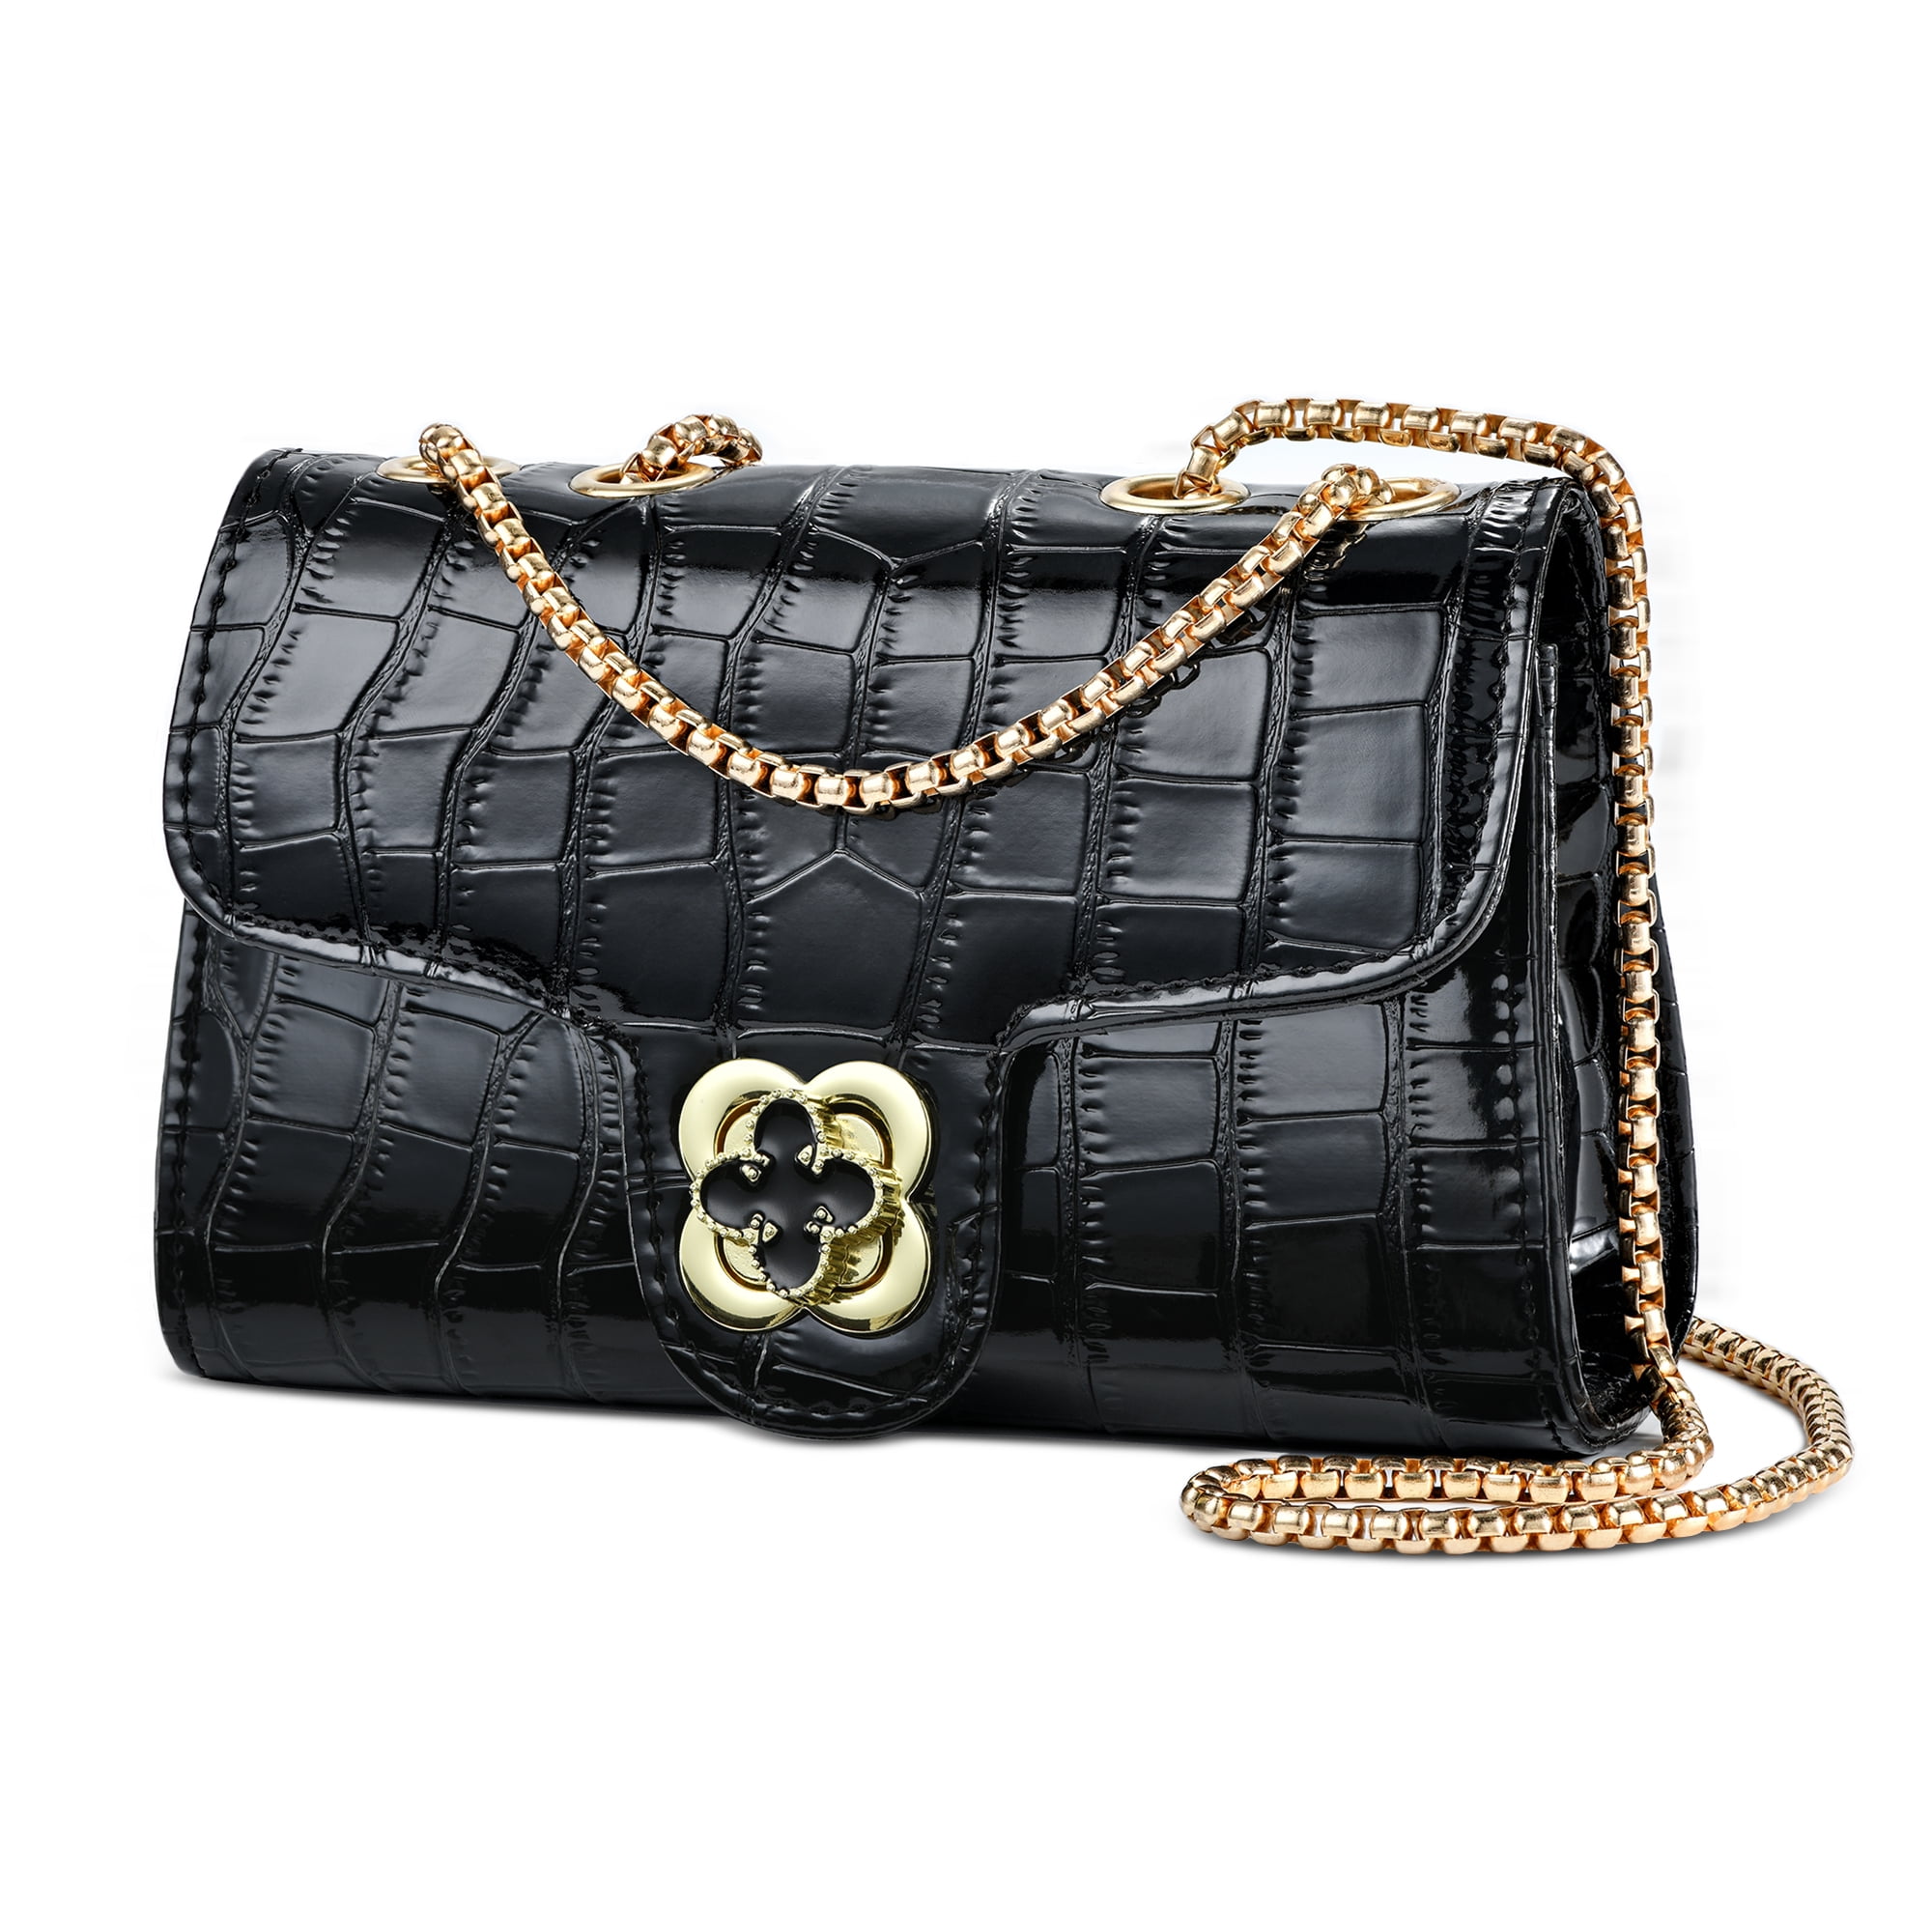 black chanel purse with chain strap crossbody